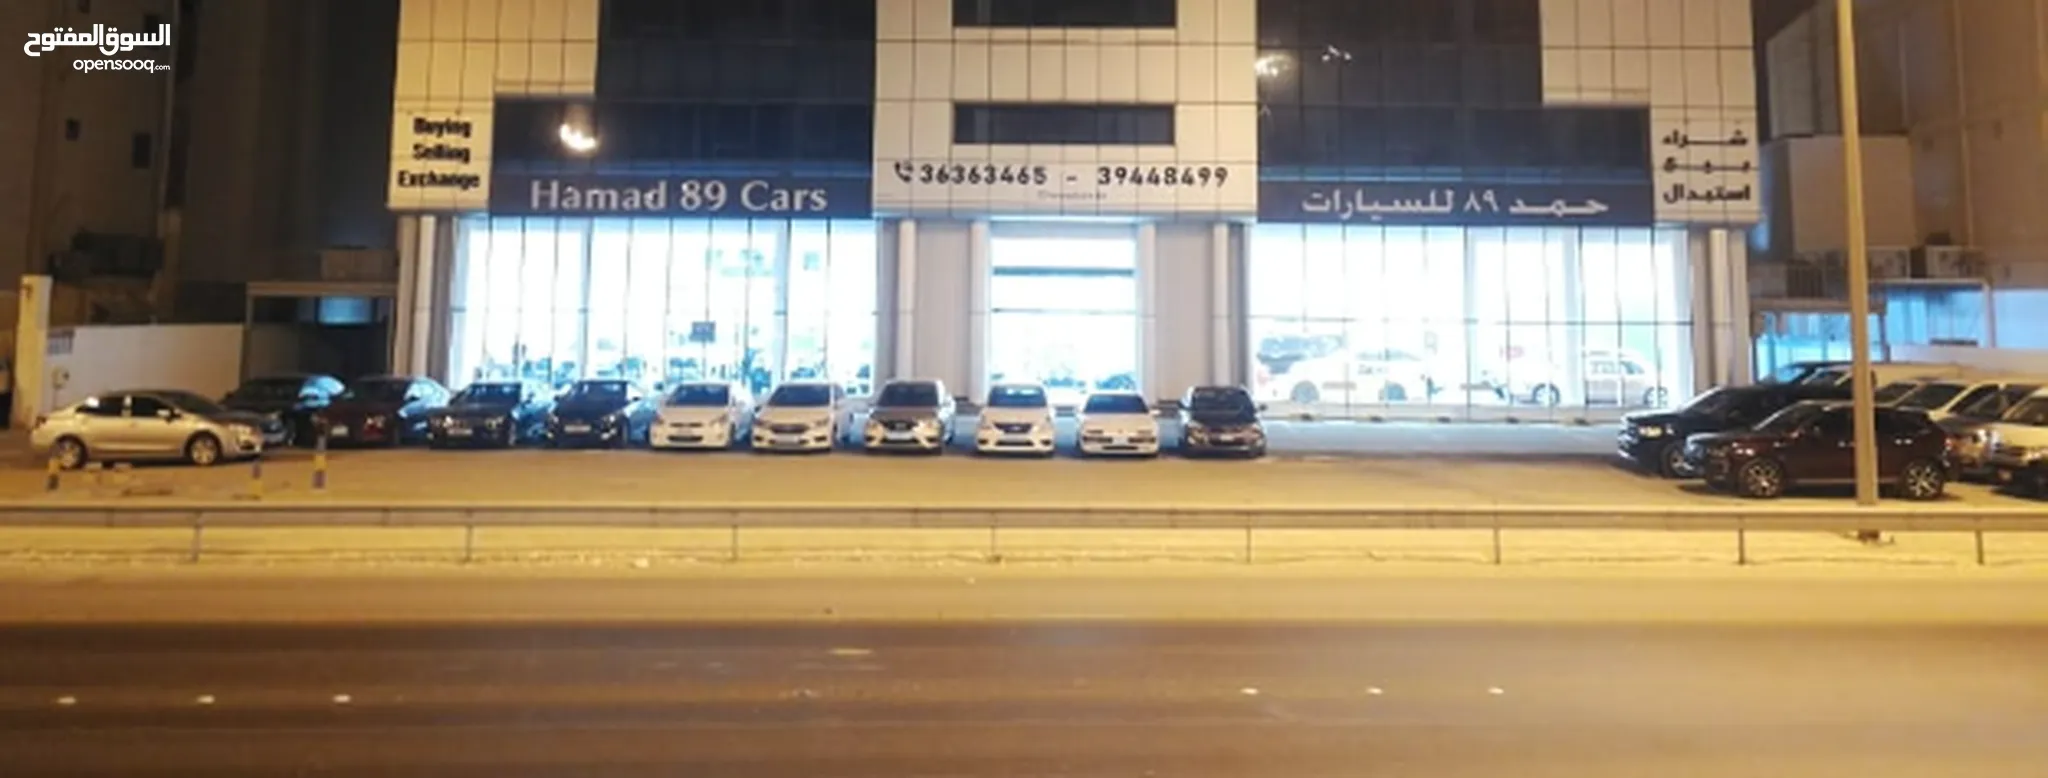 Hamad 89 Cars